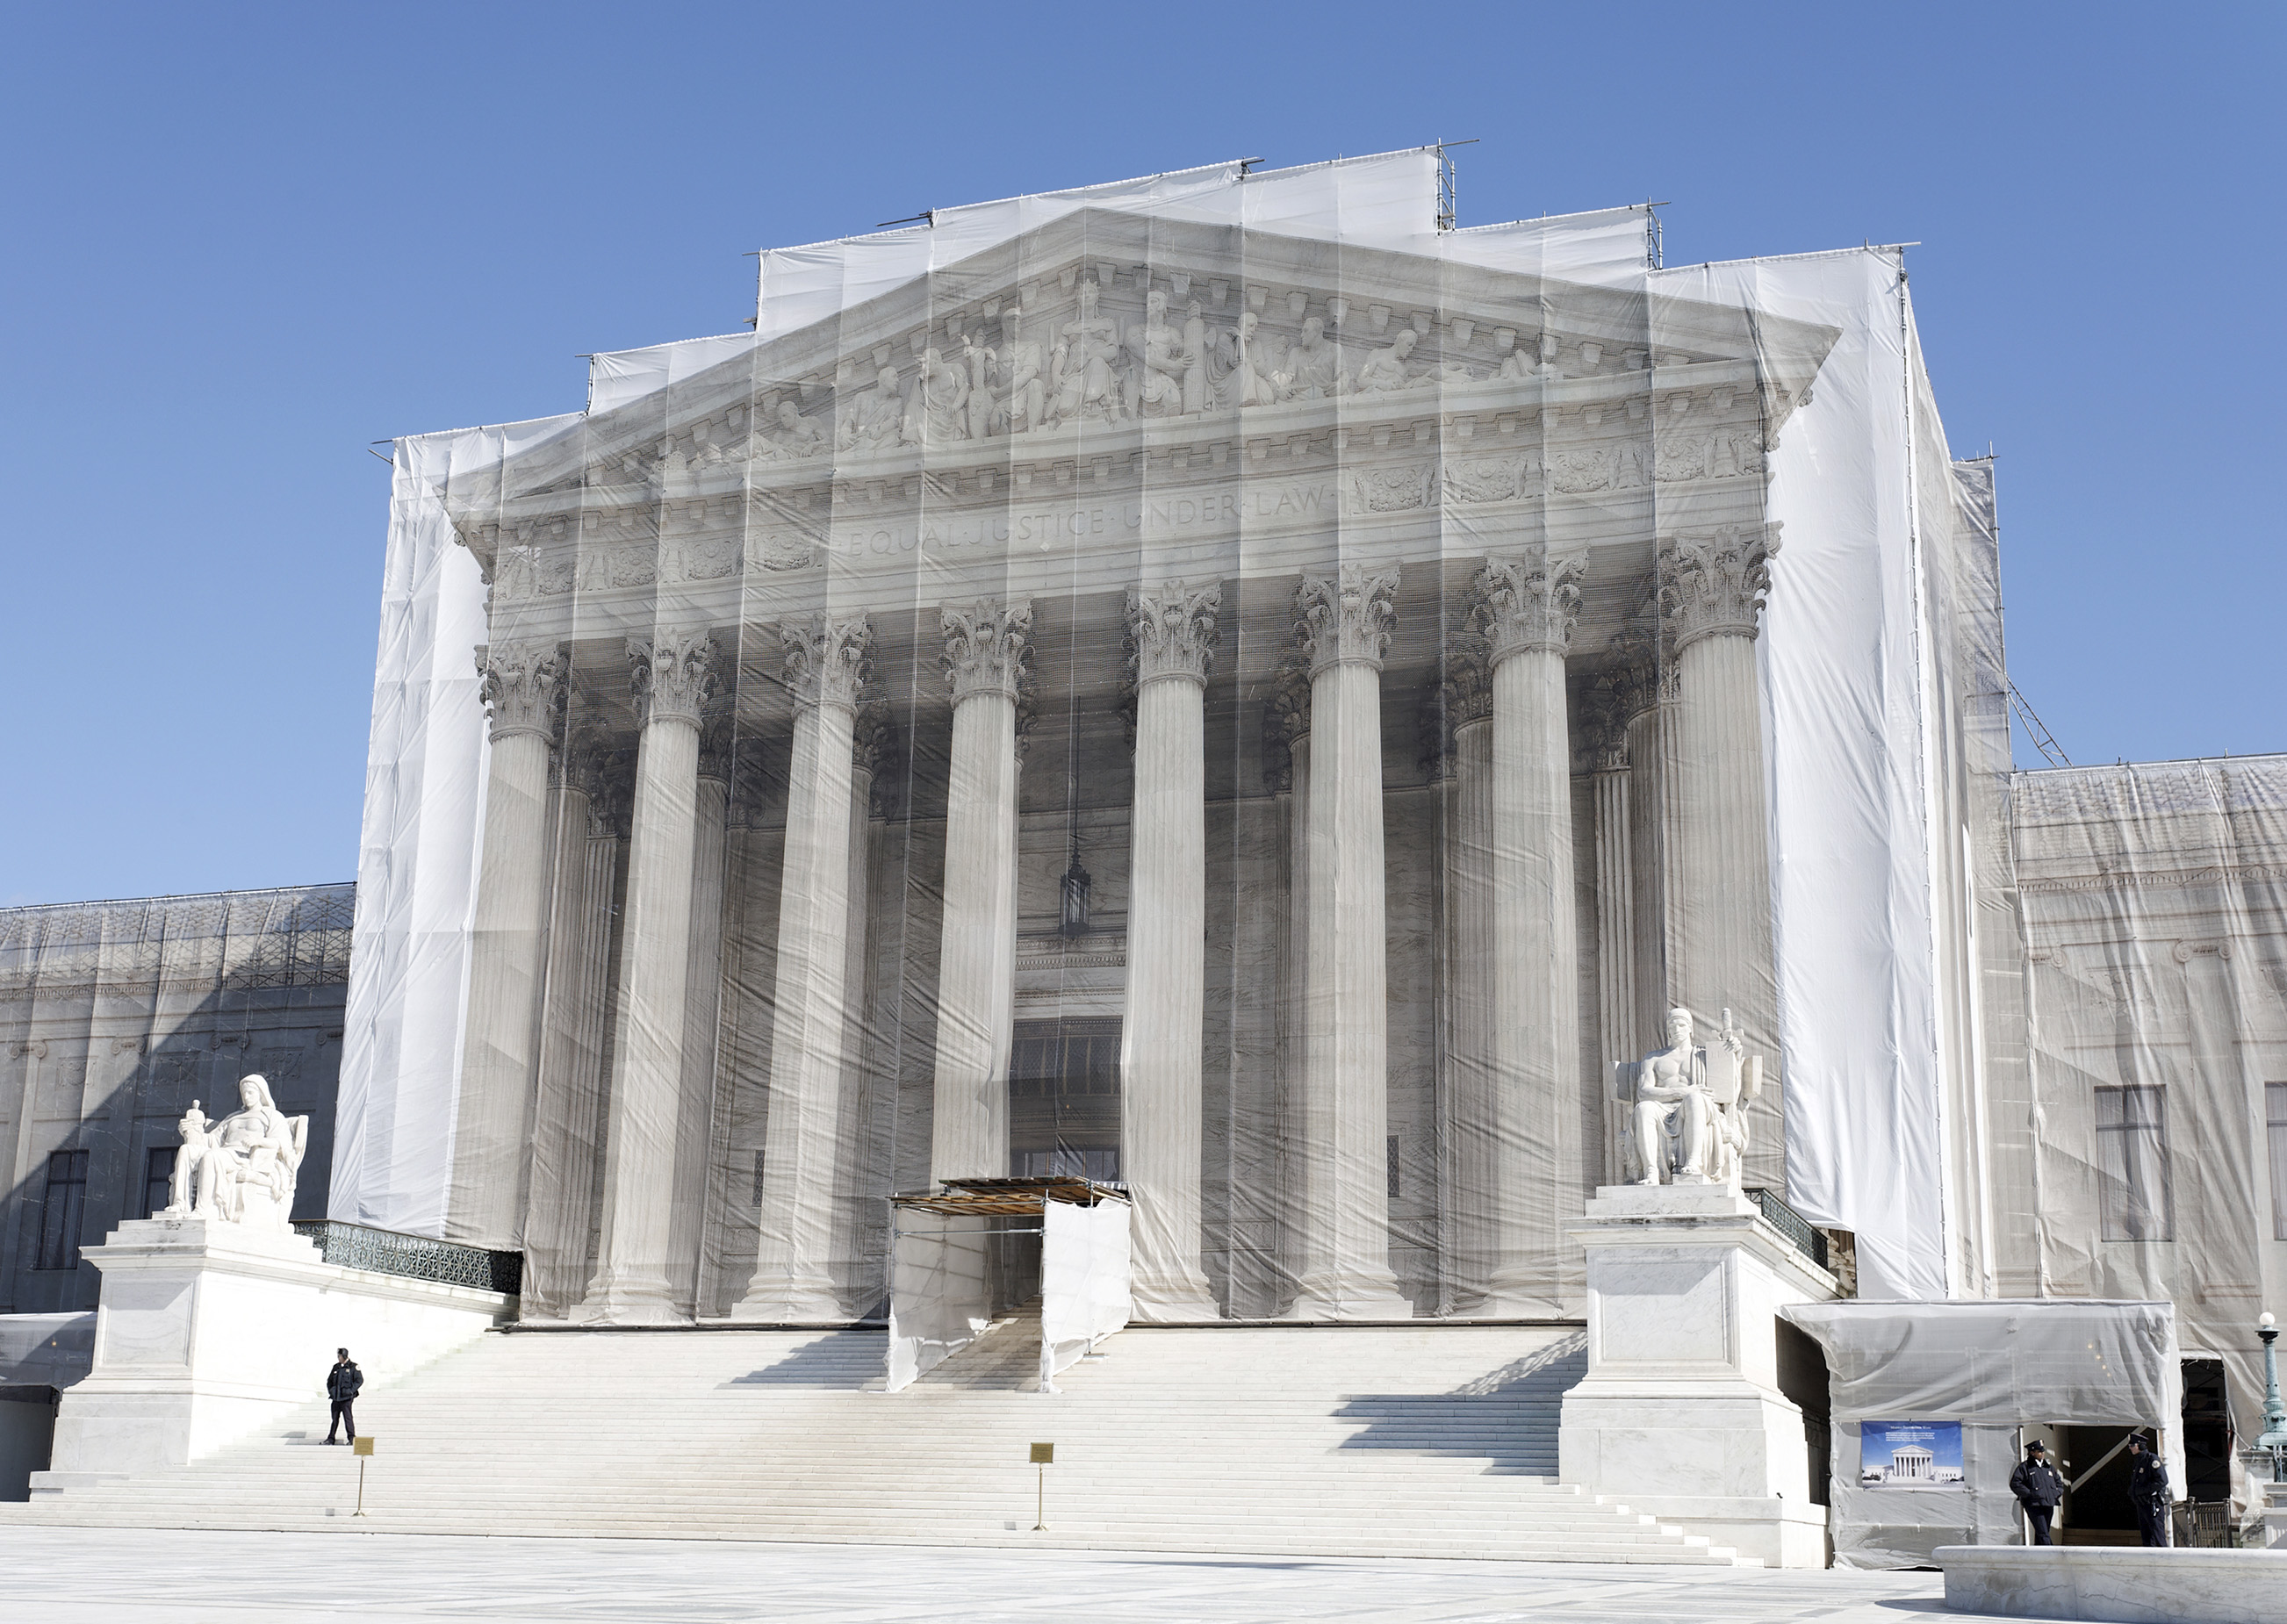 US supreme court building under renovation